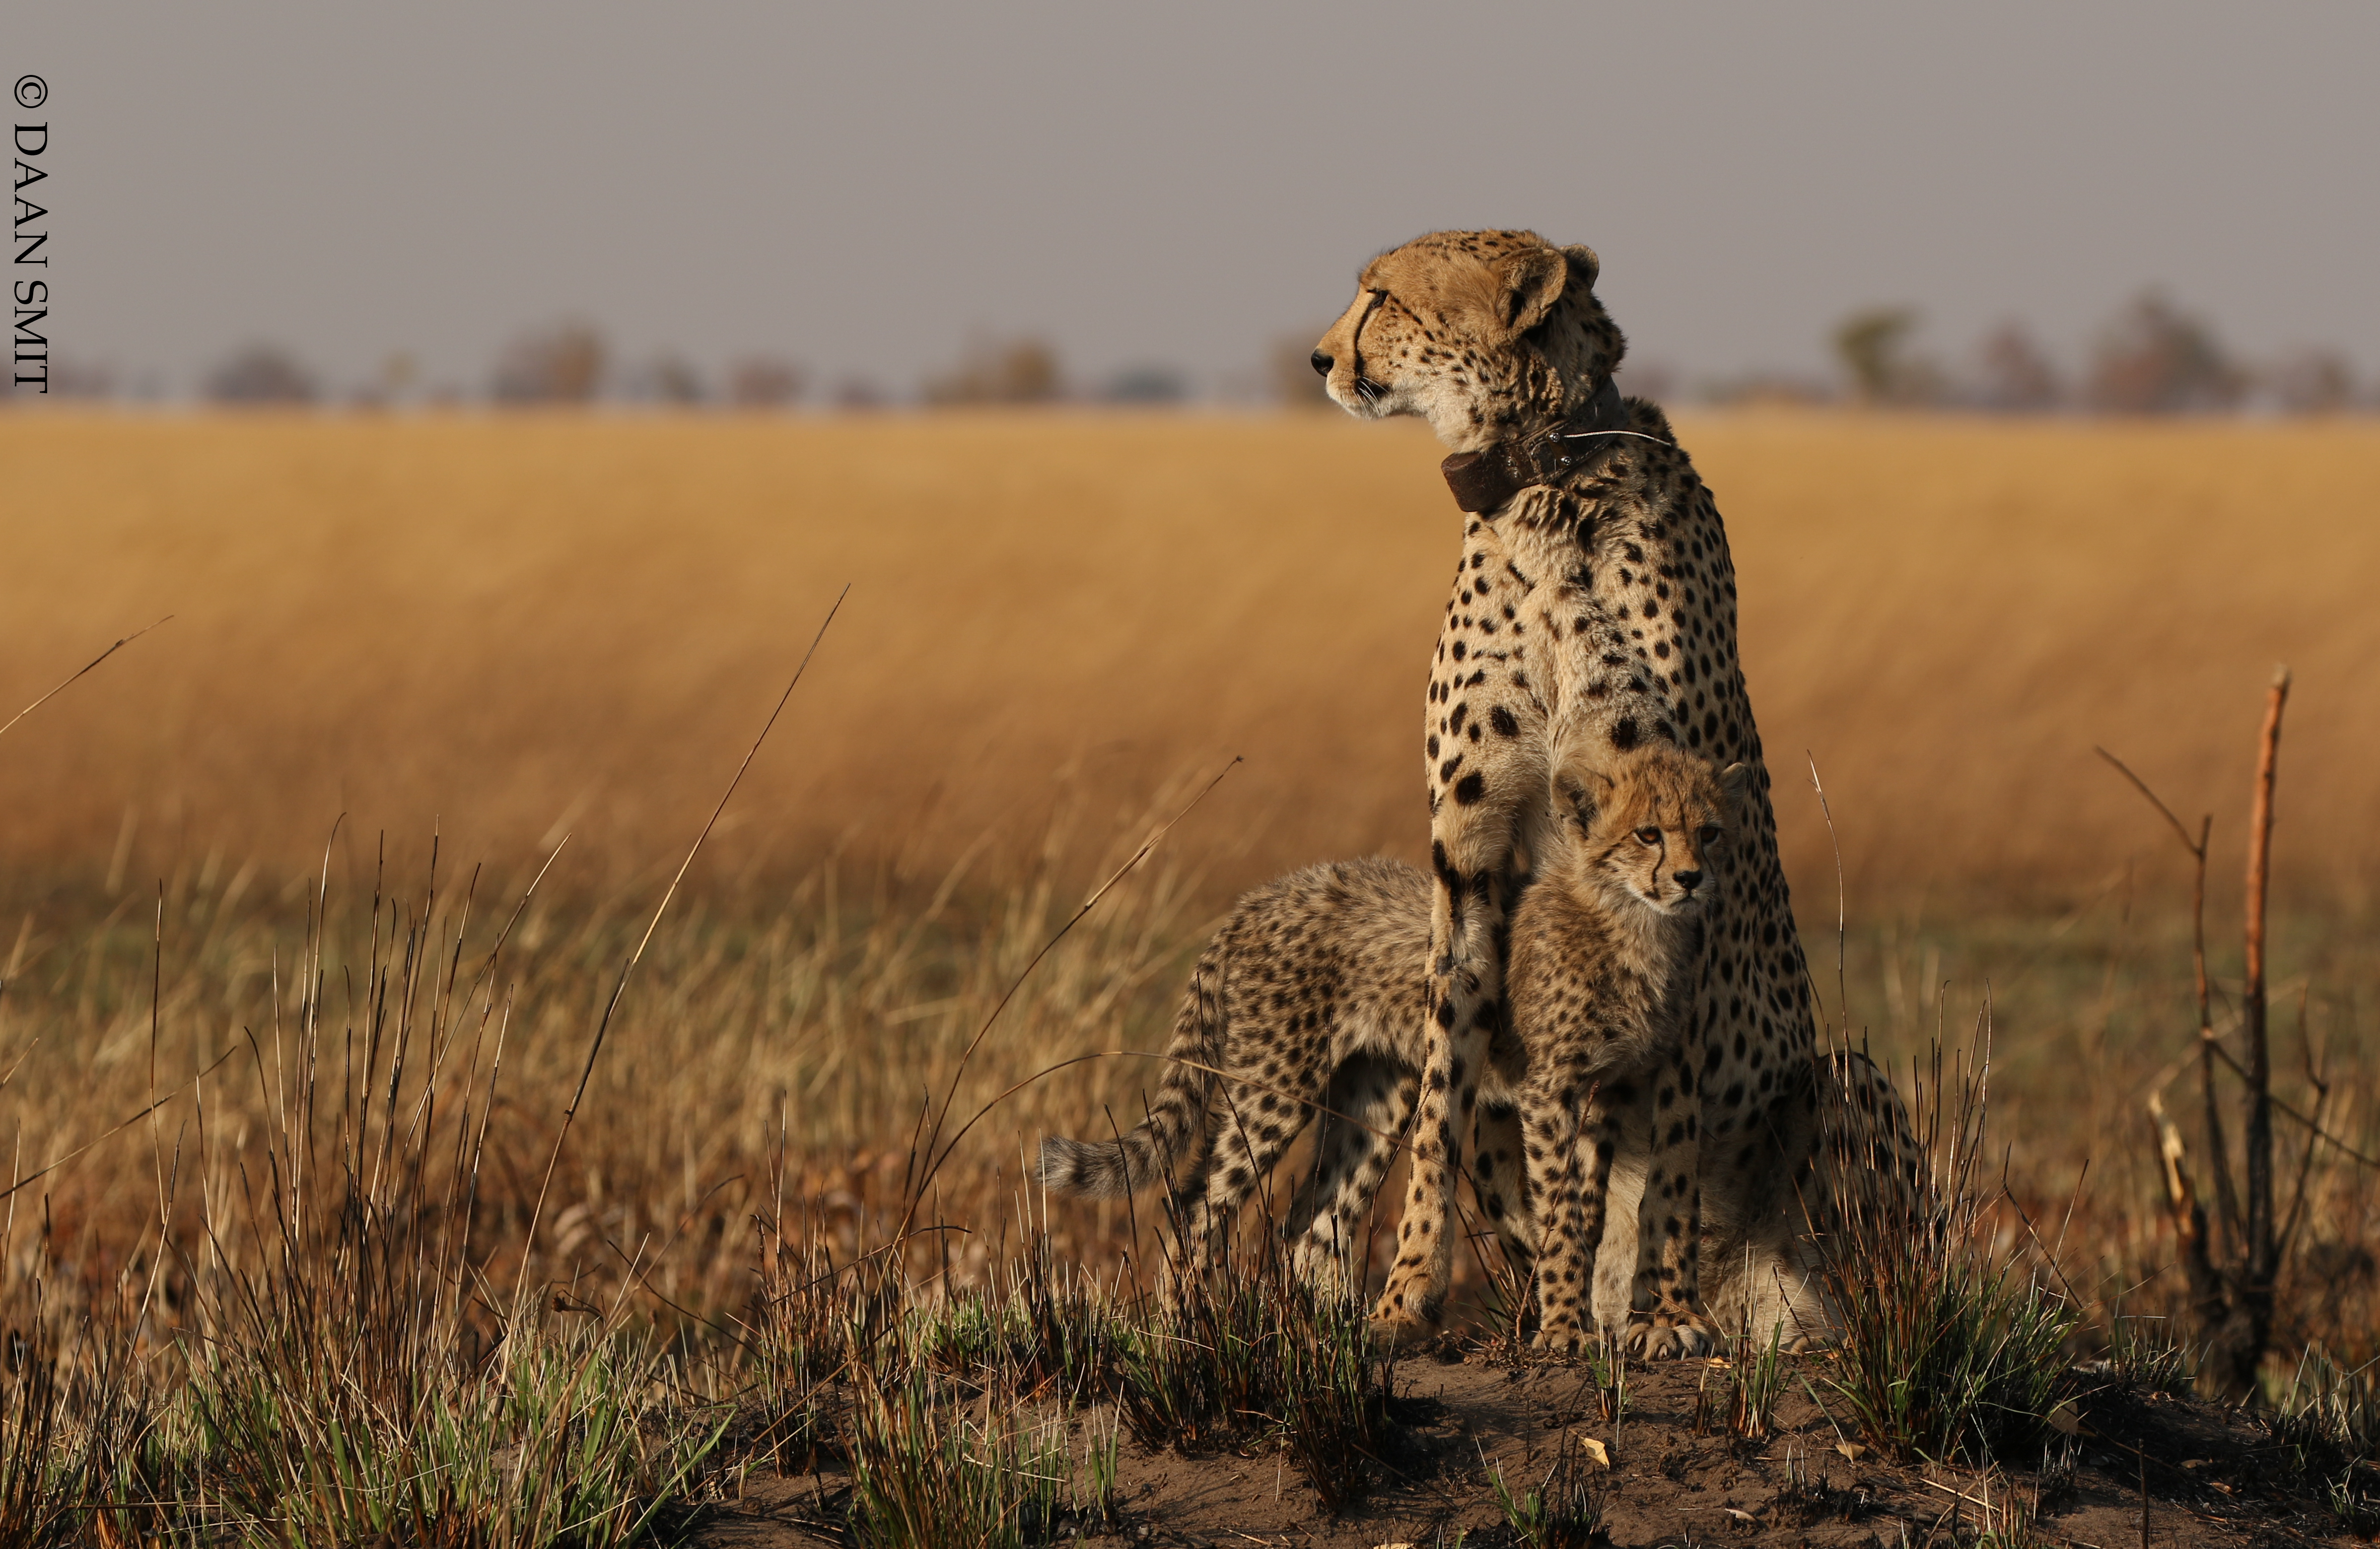 Cheetah sitting